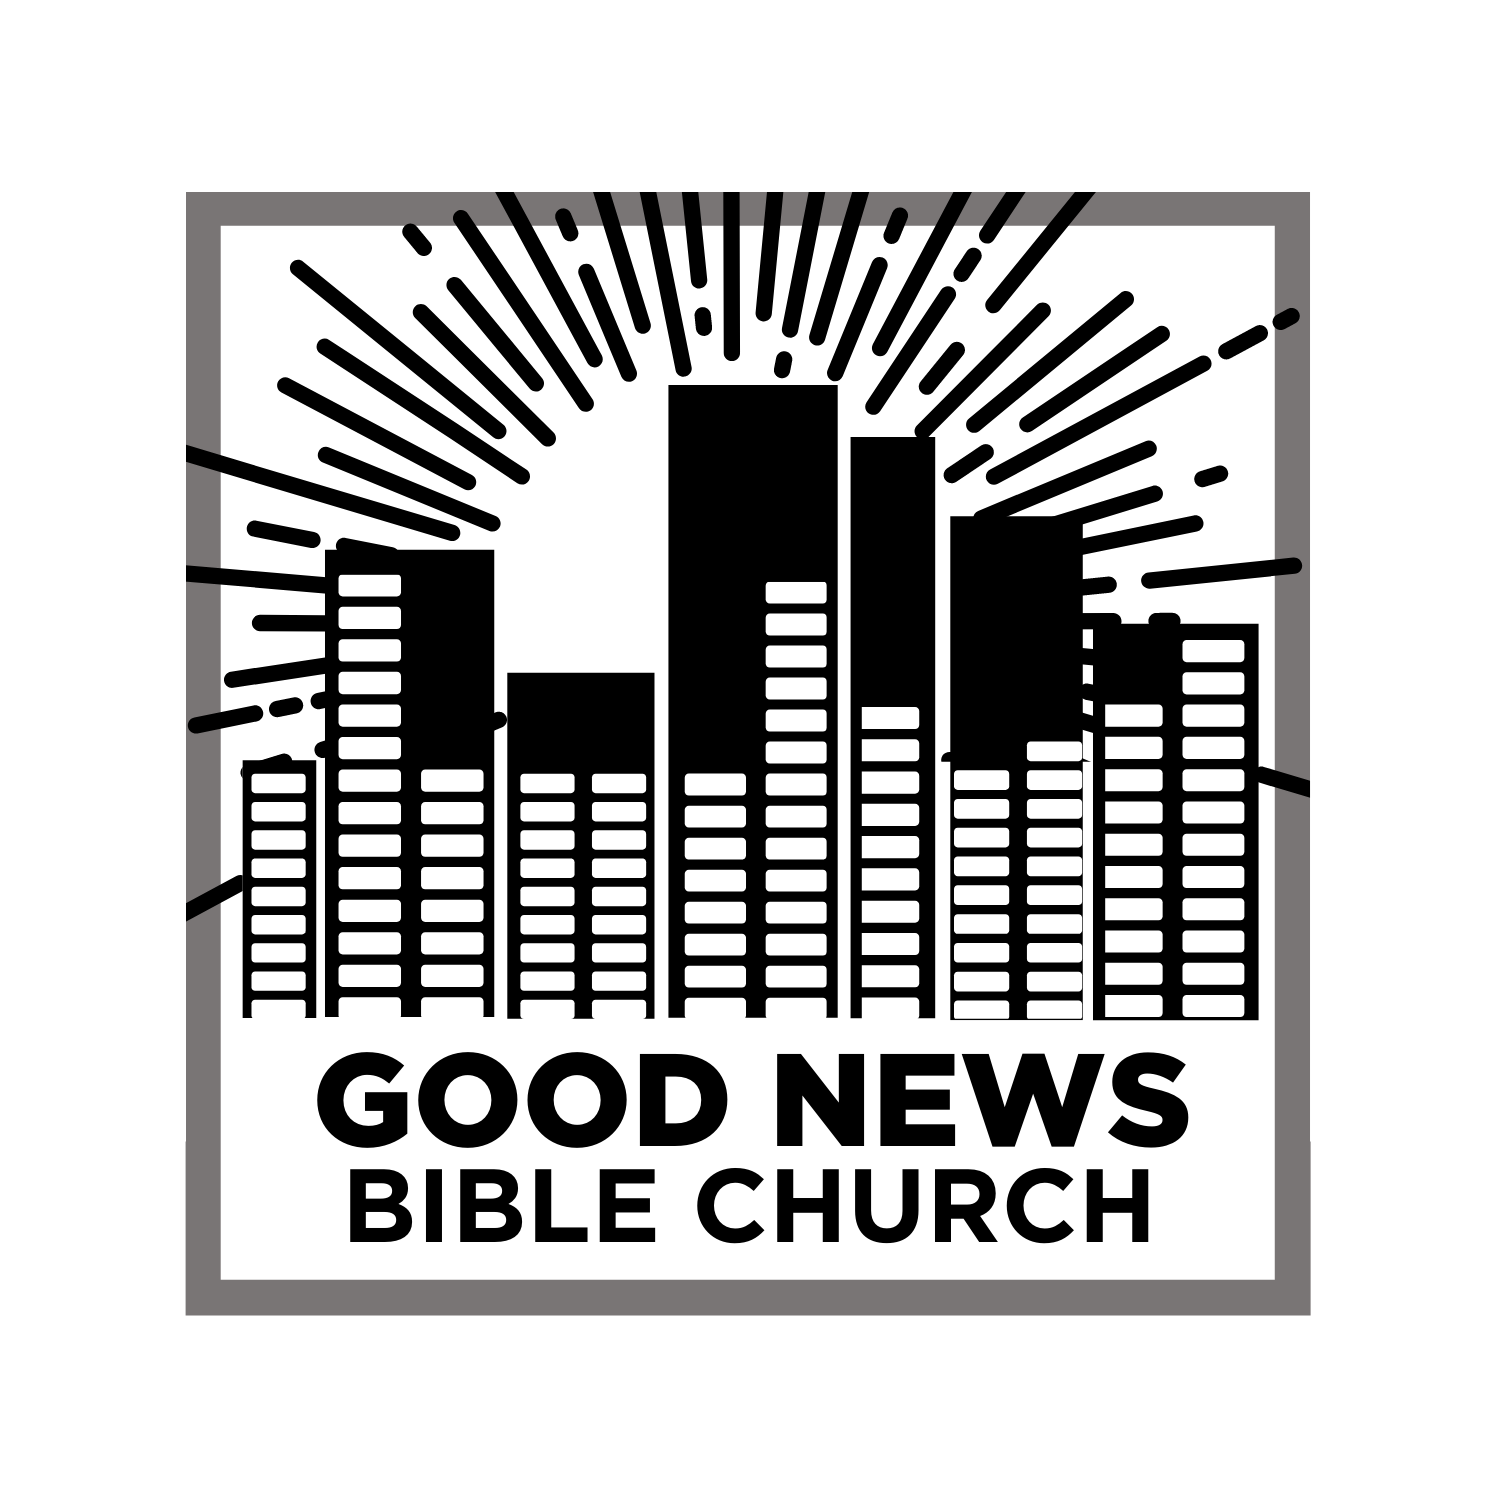 Good News Bible Church